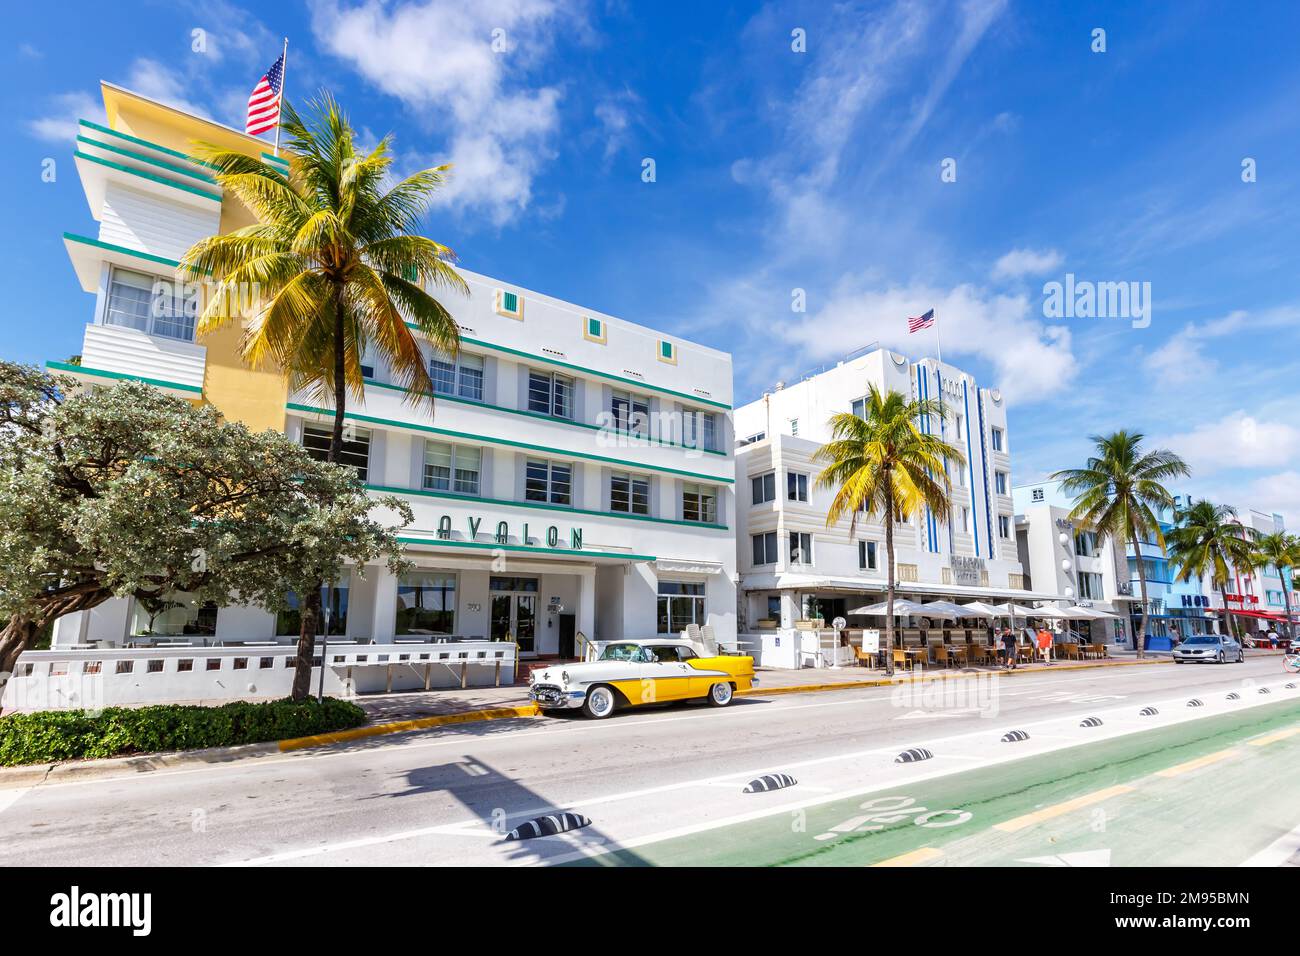 Miami Beach, United States - November 15, 2022: Avalon Hotel in Art Deco architecture style and classic car on Ocean Drive in Miami Beach Florida, Uni Stock Photo